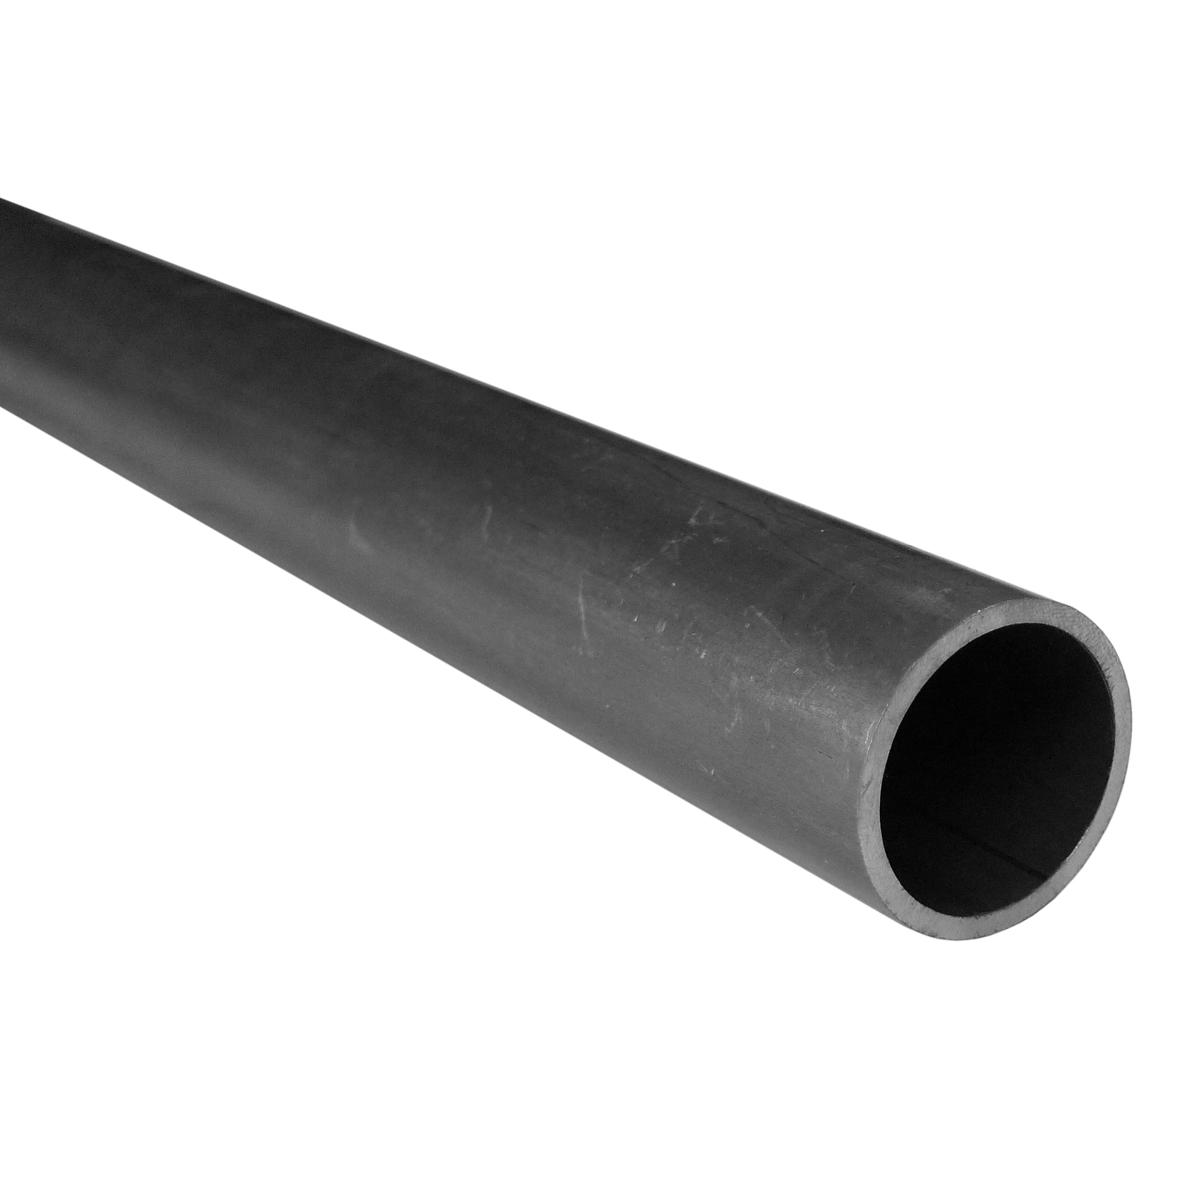 CDS Seamless Steel Tube (Roll Cage Tube) 1.75" (45mm) Outside Diameter